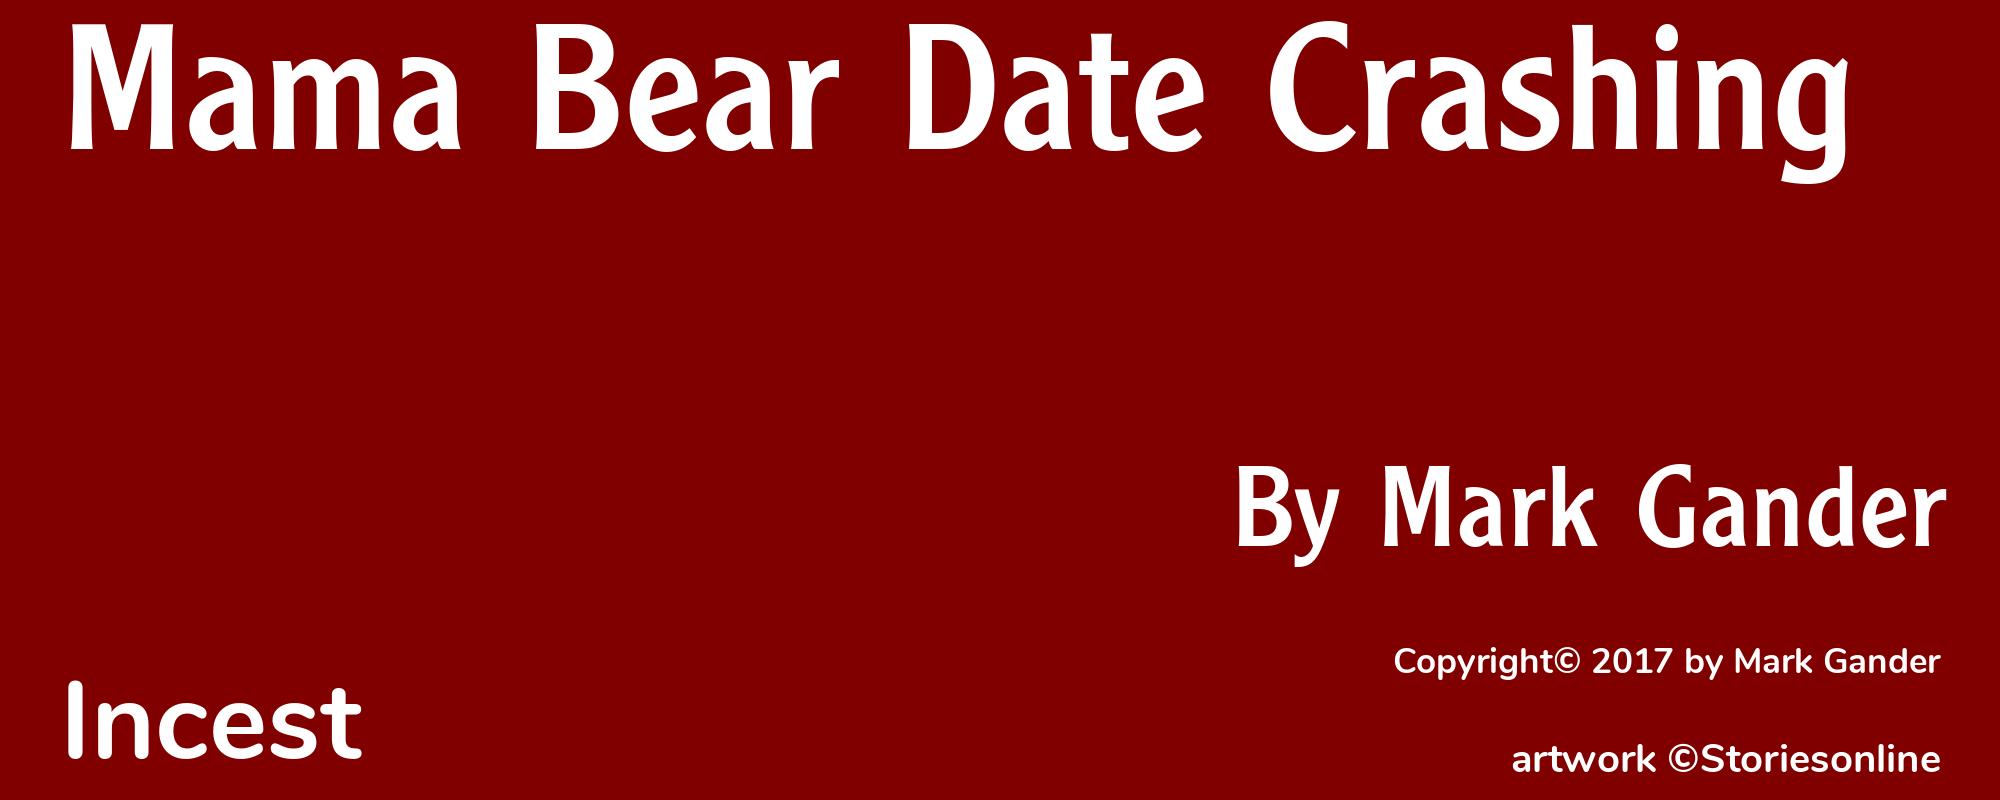 Mama Bear Date Crashing - Cover